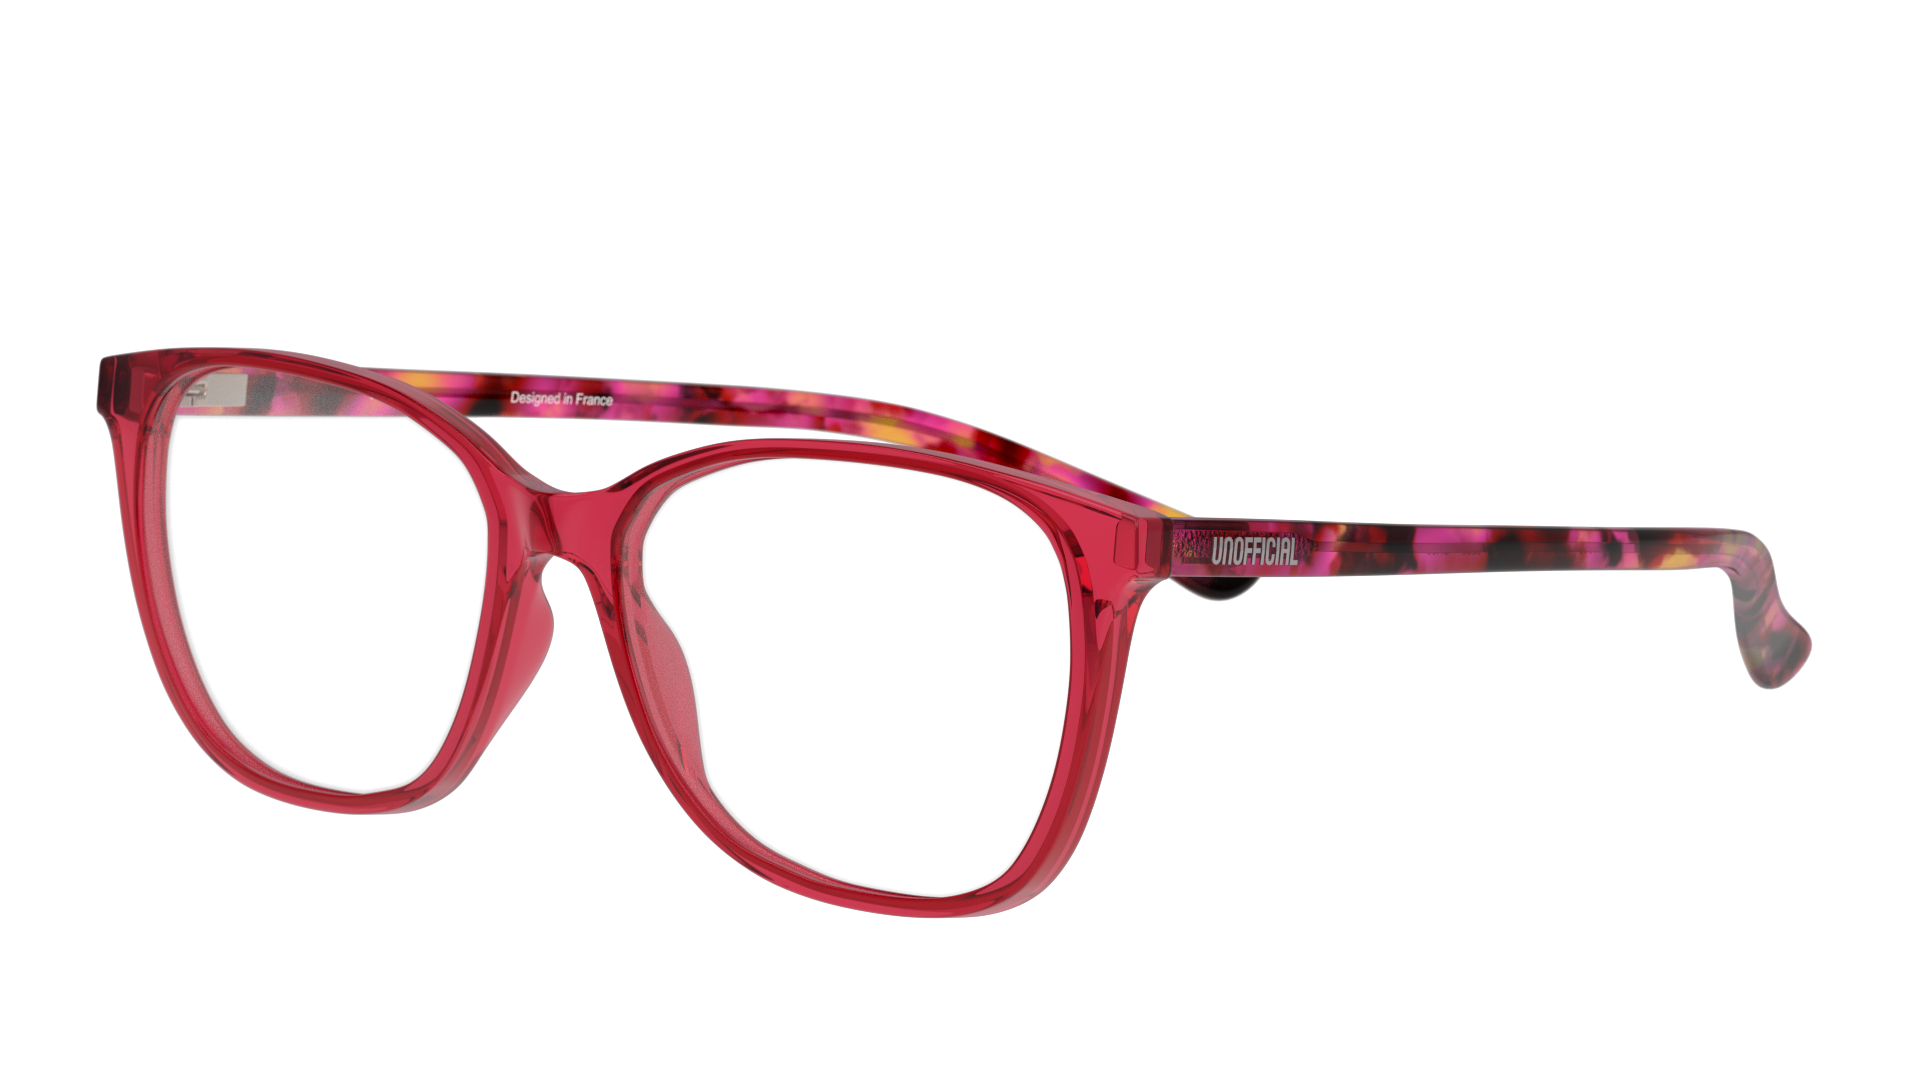 Angle_Left01 Unofficial UN OF0236 Children's Glasses Transparent / Pink